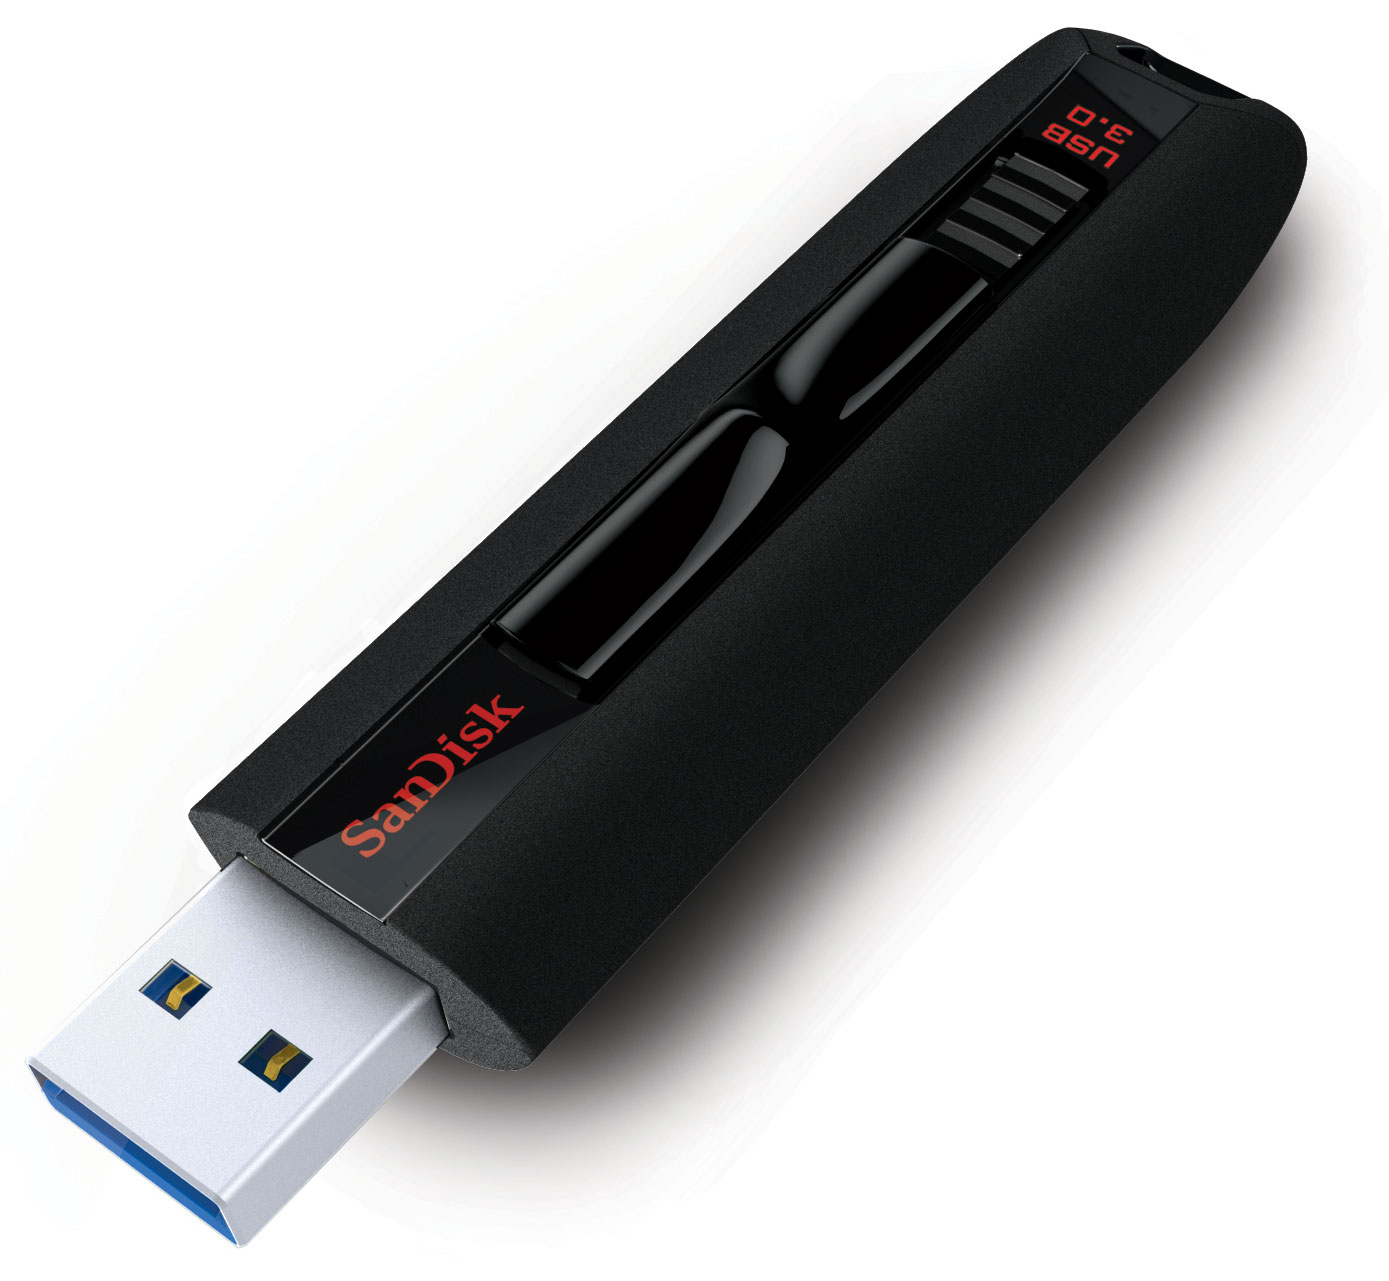 Extreme USB 3.0 Flash Drive - 128GB